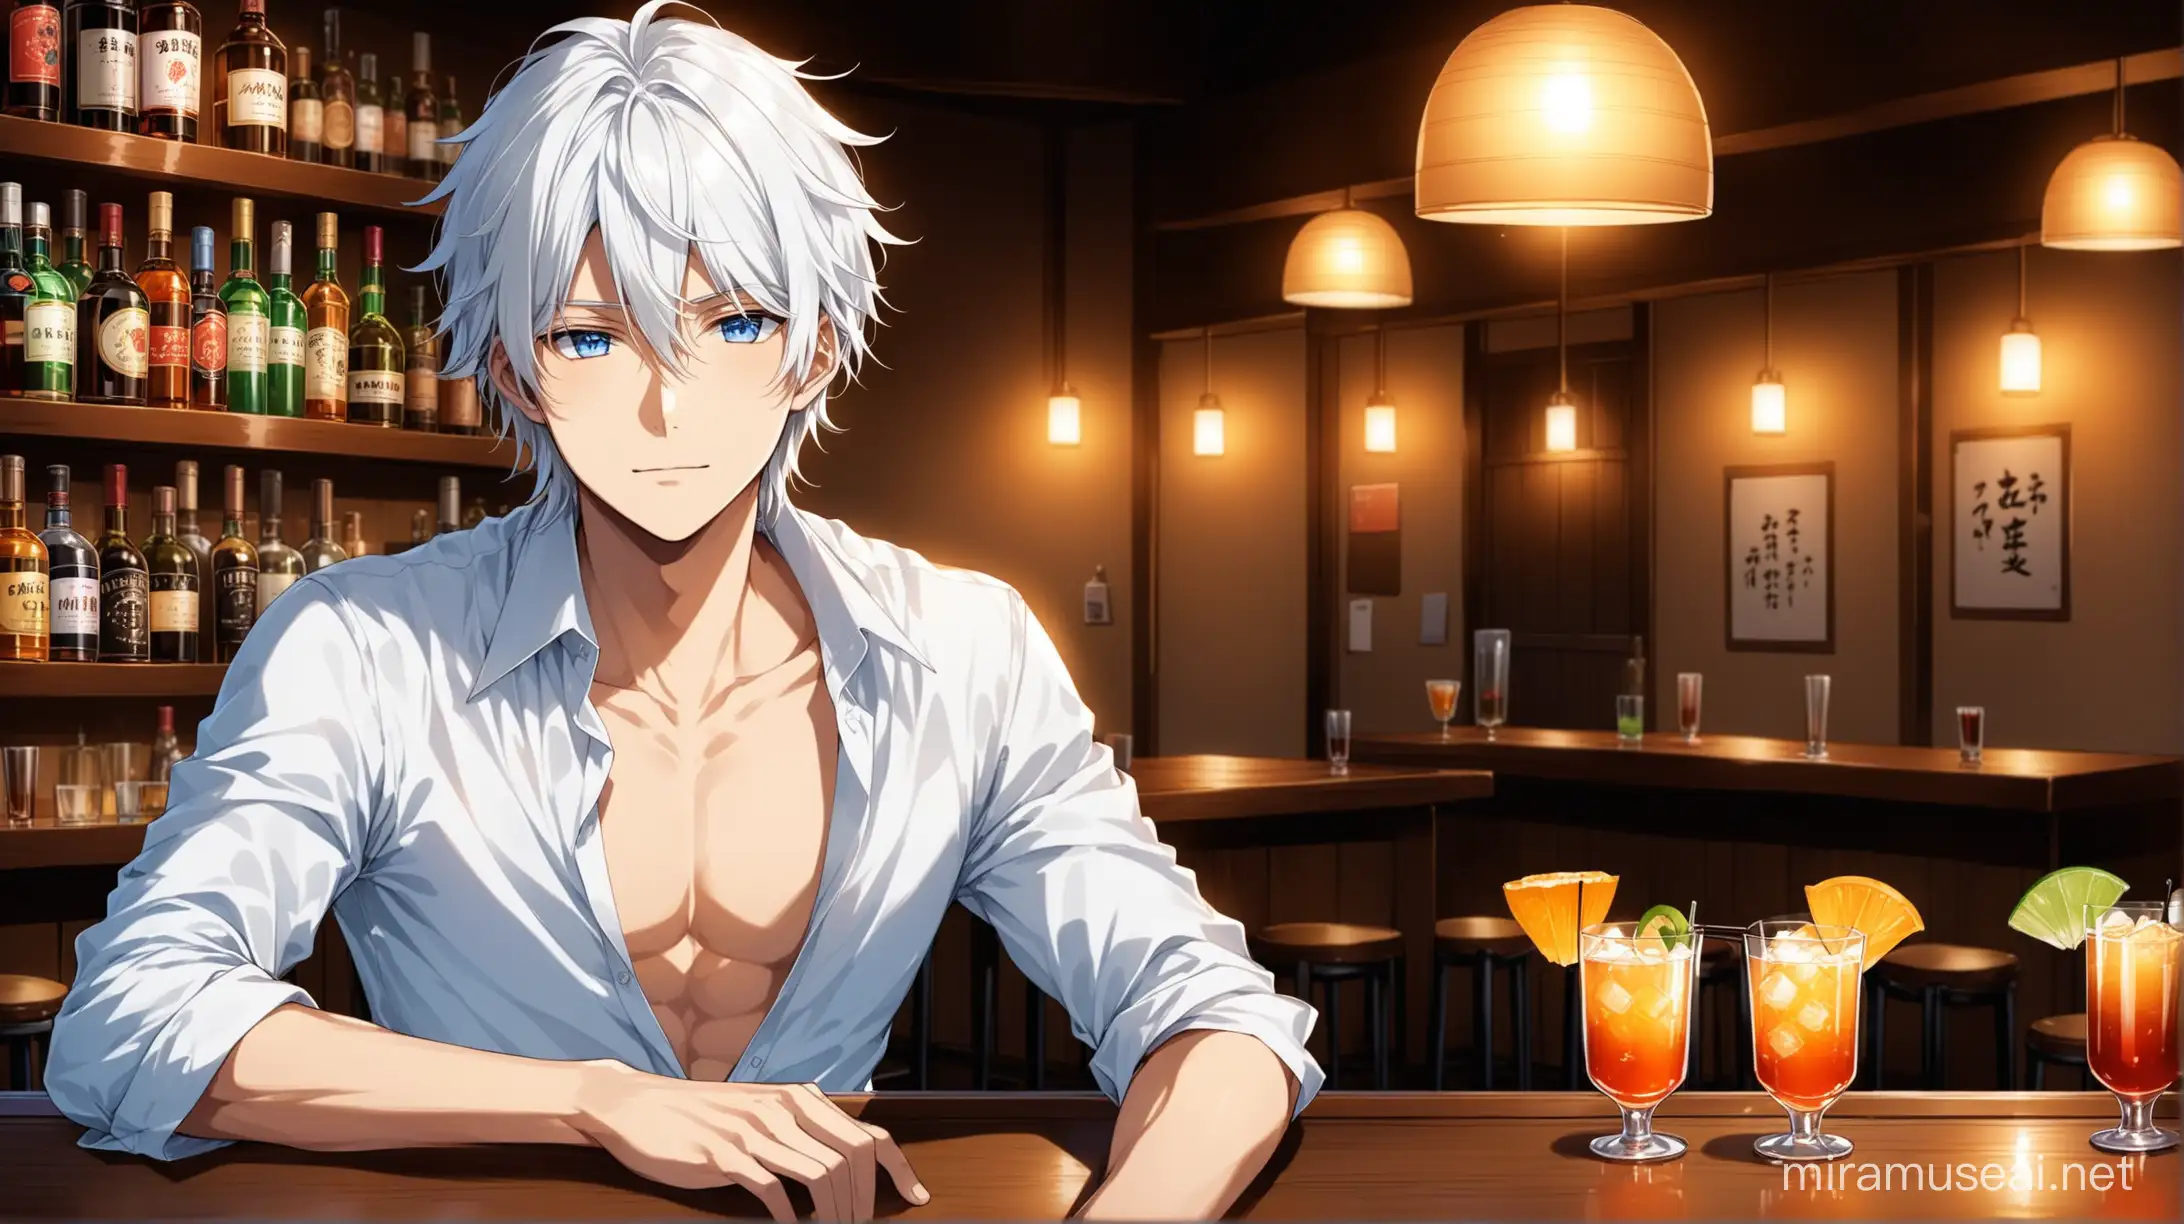 Intimate Bar Scene WhiteHaired Anime Boy Enjoying Cocktails